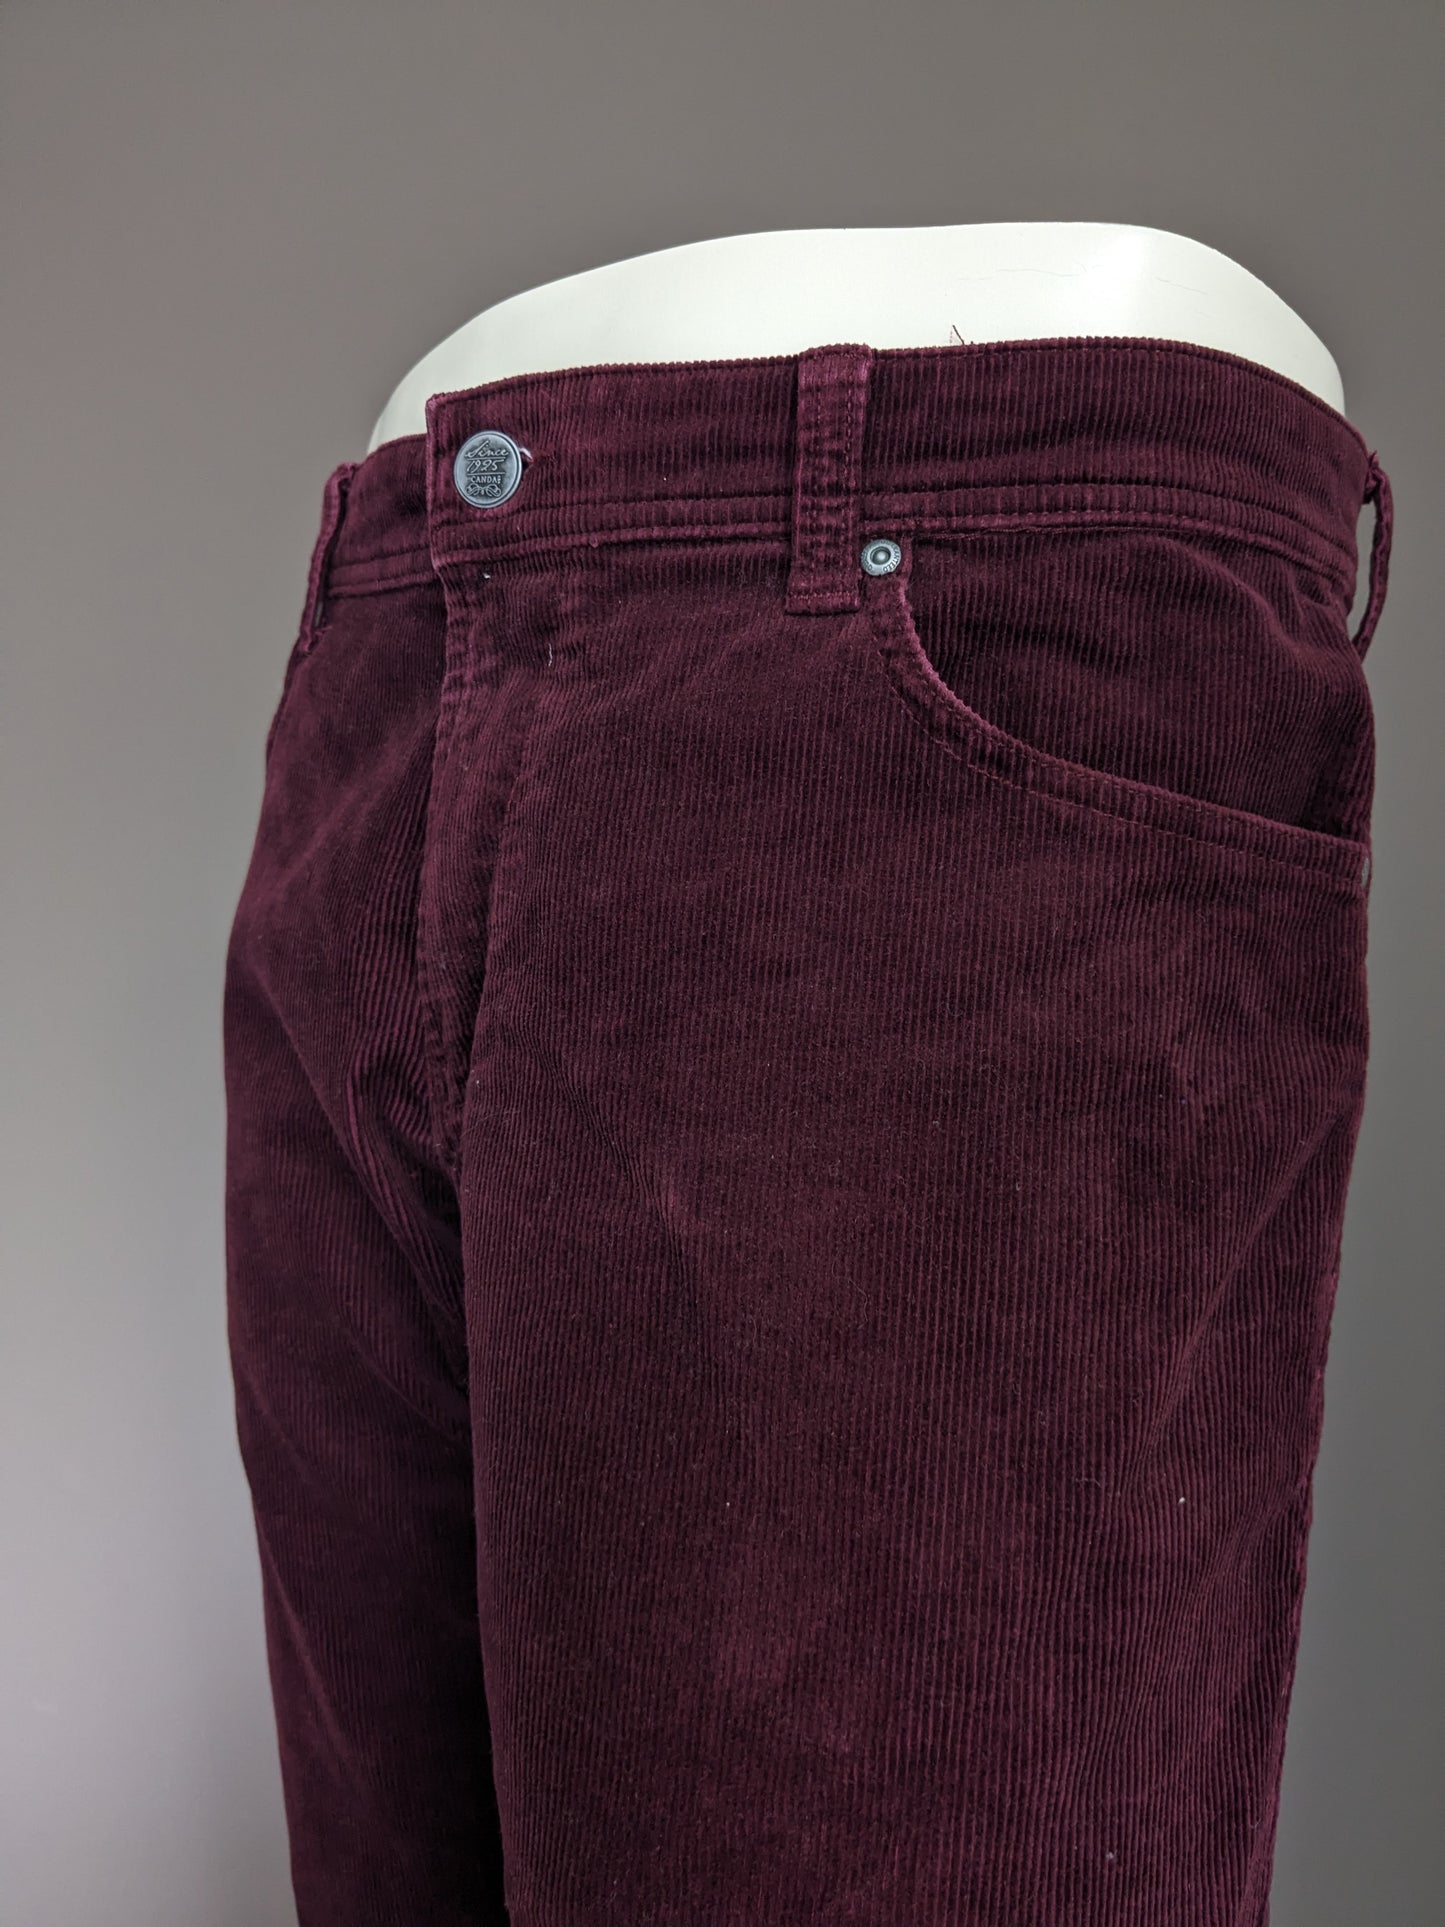 Canda rib pants. Bordeaux colored. Size W36 - L32. Stretch.